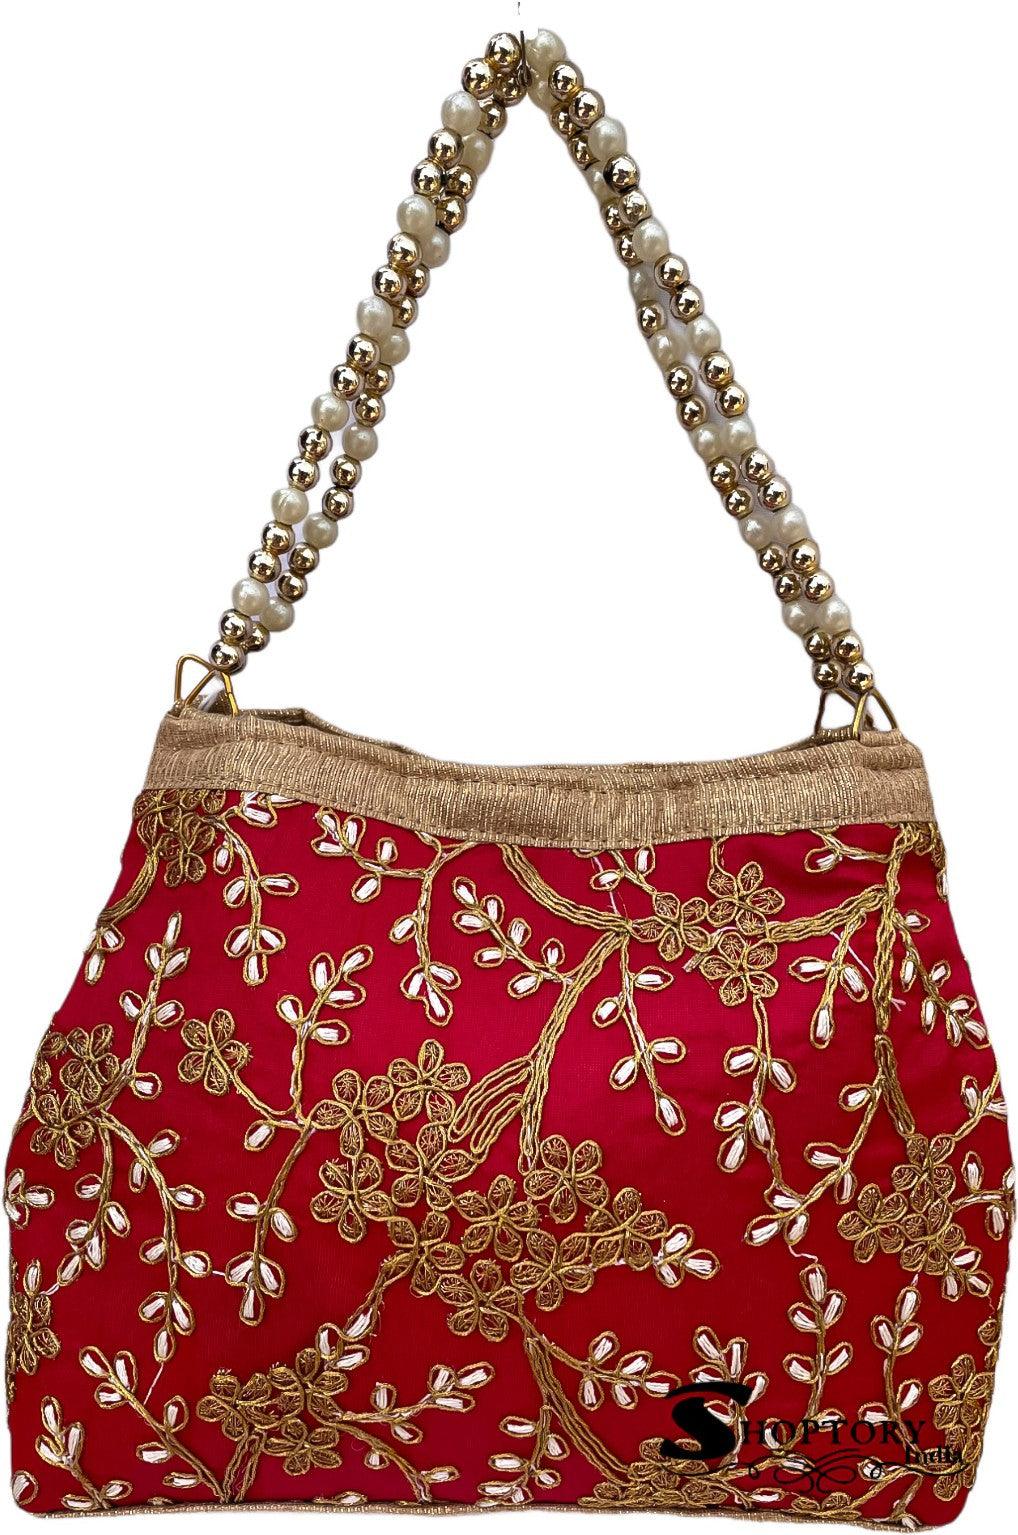 Cotton hand bag with elephant design - Crafti Bazaar